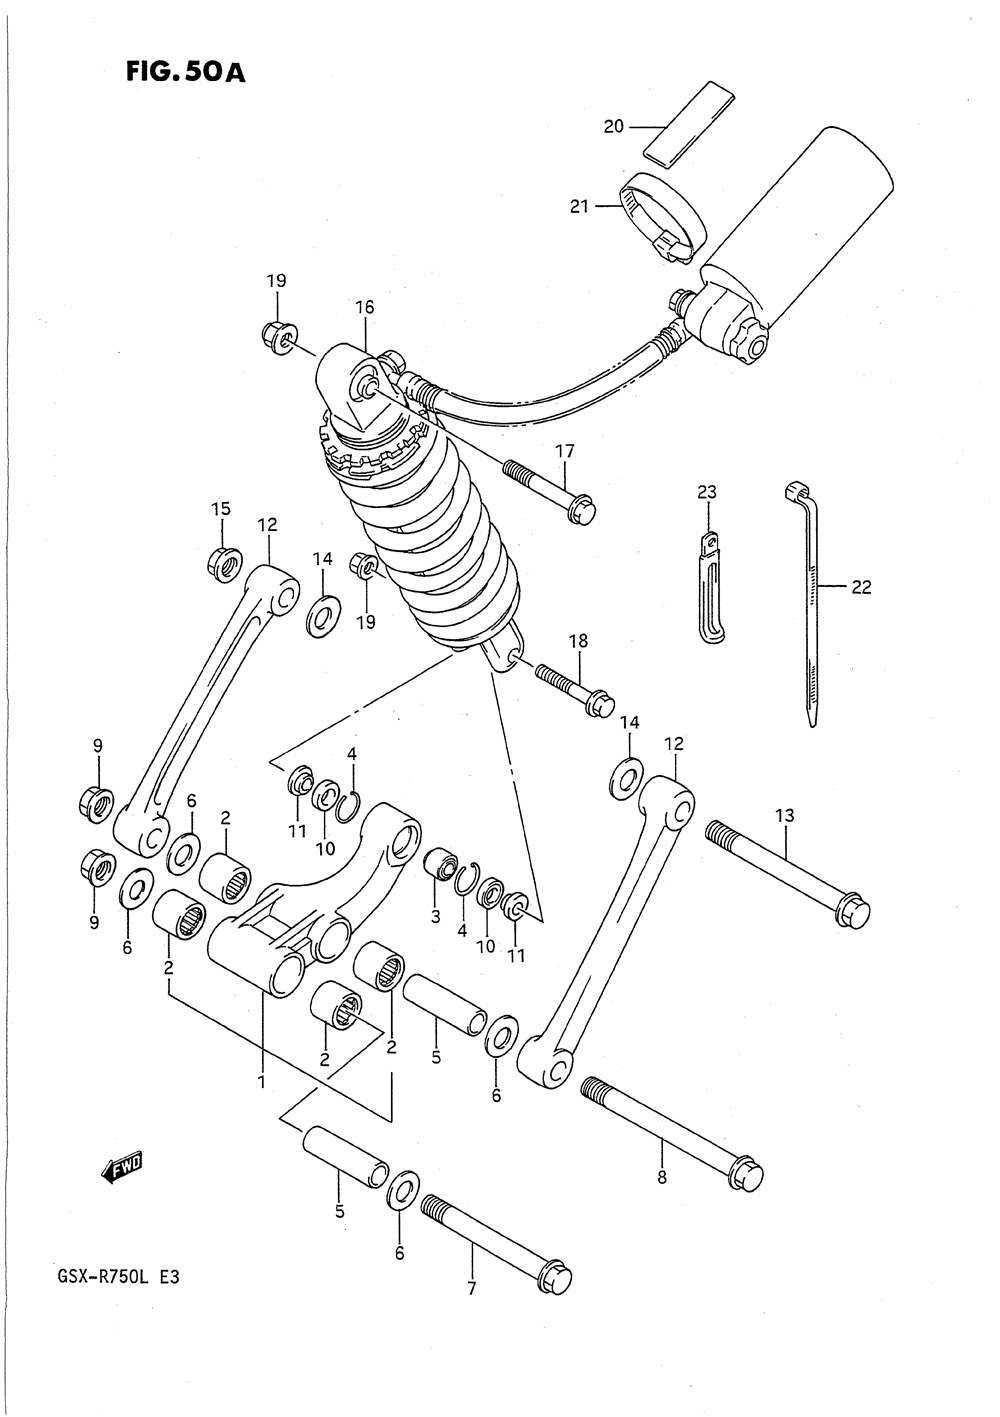 Rear cushion lever (model l)